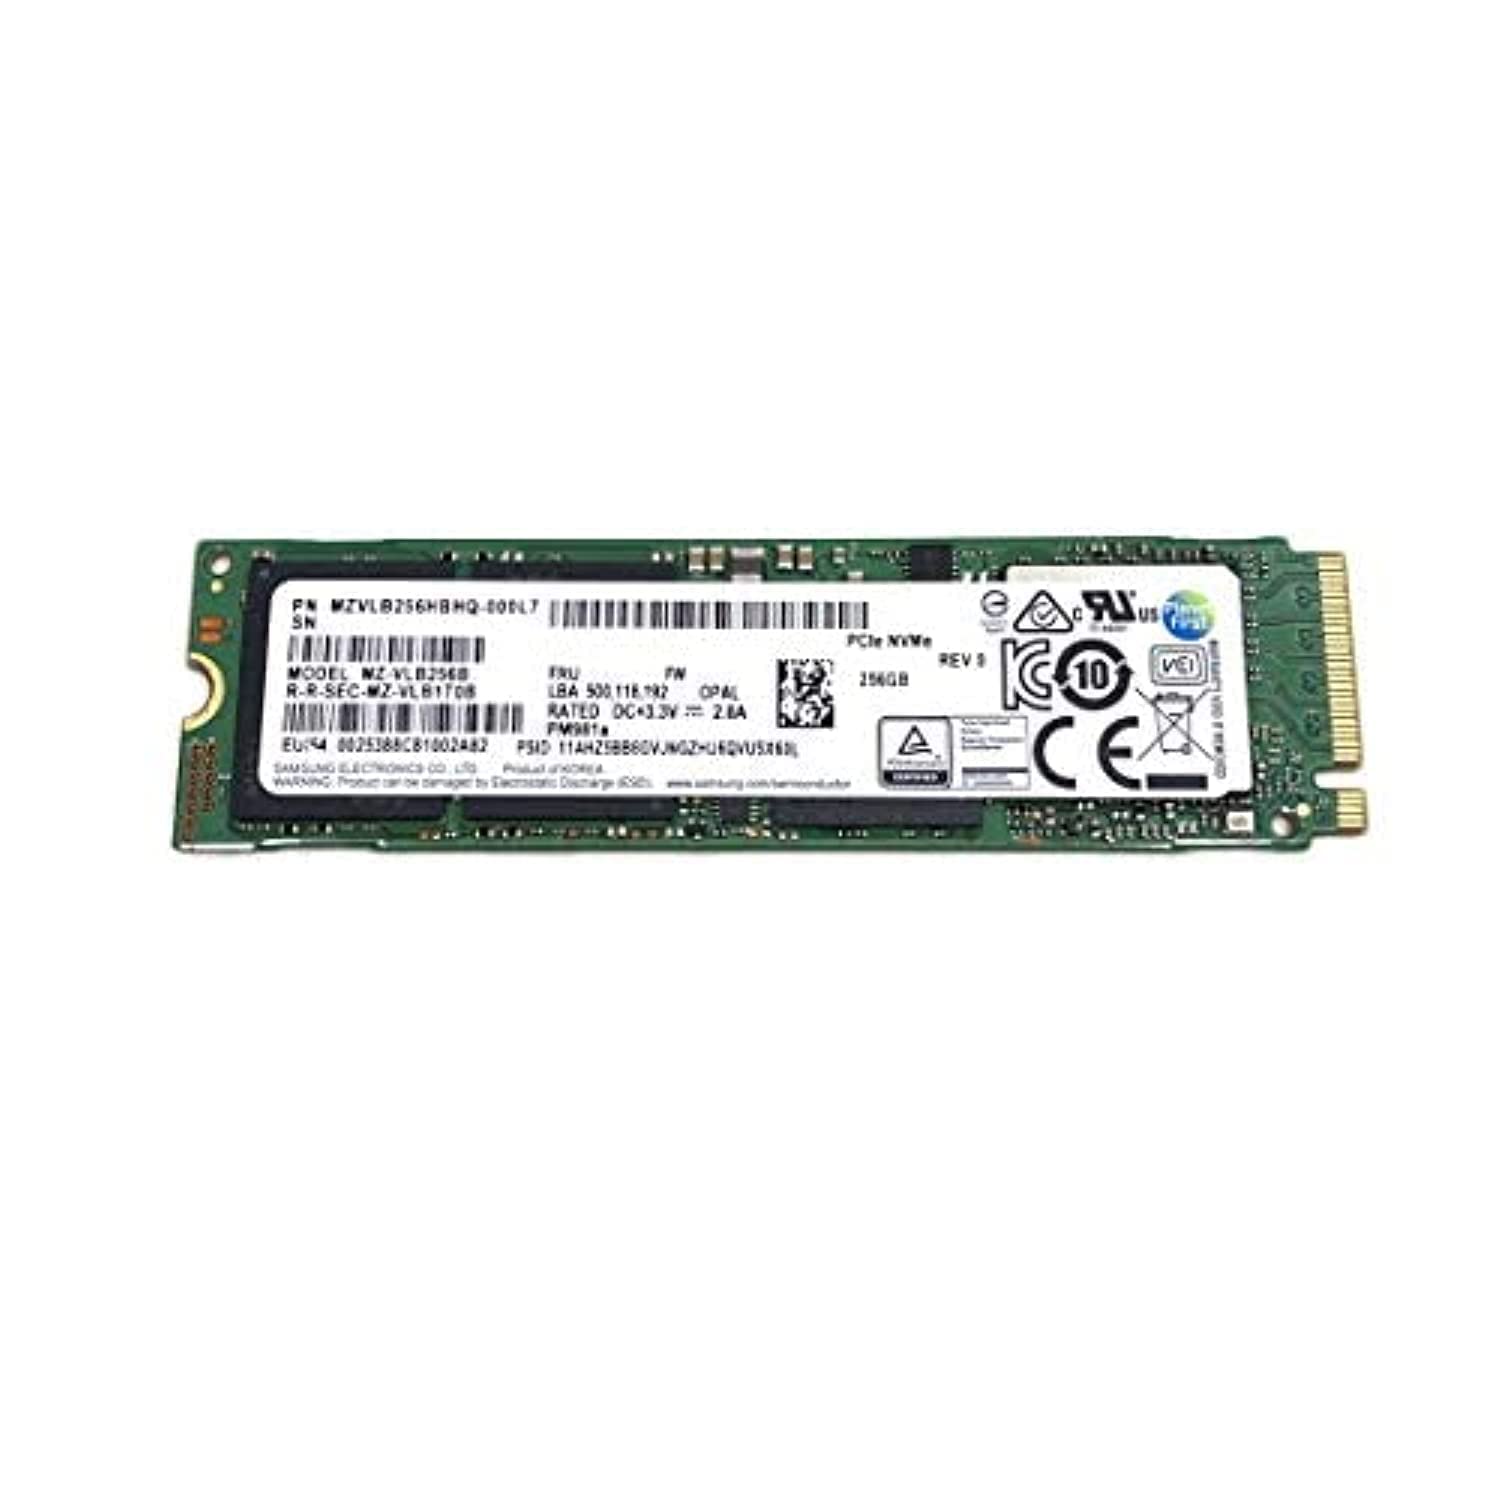 Samsung SSD 256GB PM981a M.2 2280 PCIe Gen3 x4 NVMe MZVLB256HBHQ SED Opal Solid State Drive並行輸入品